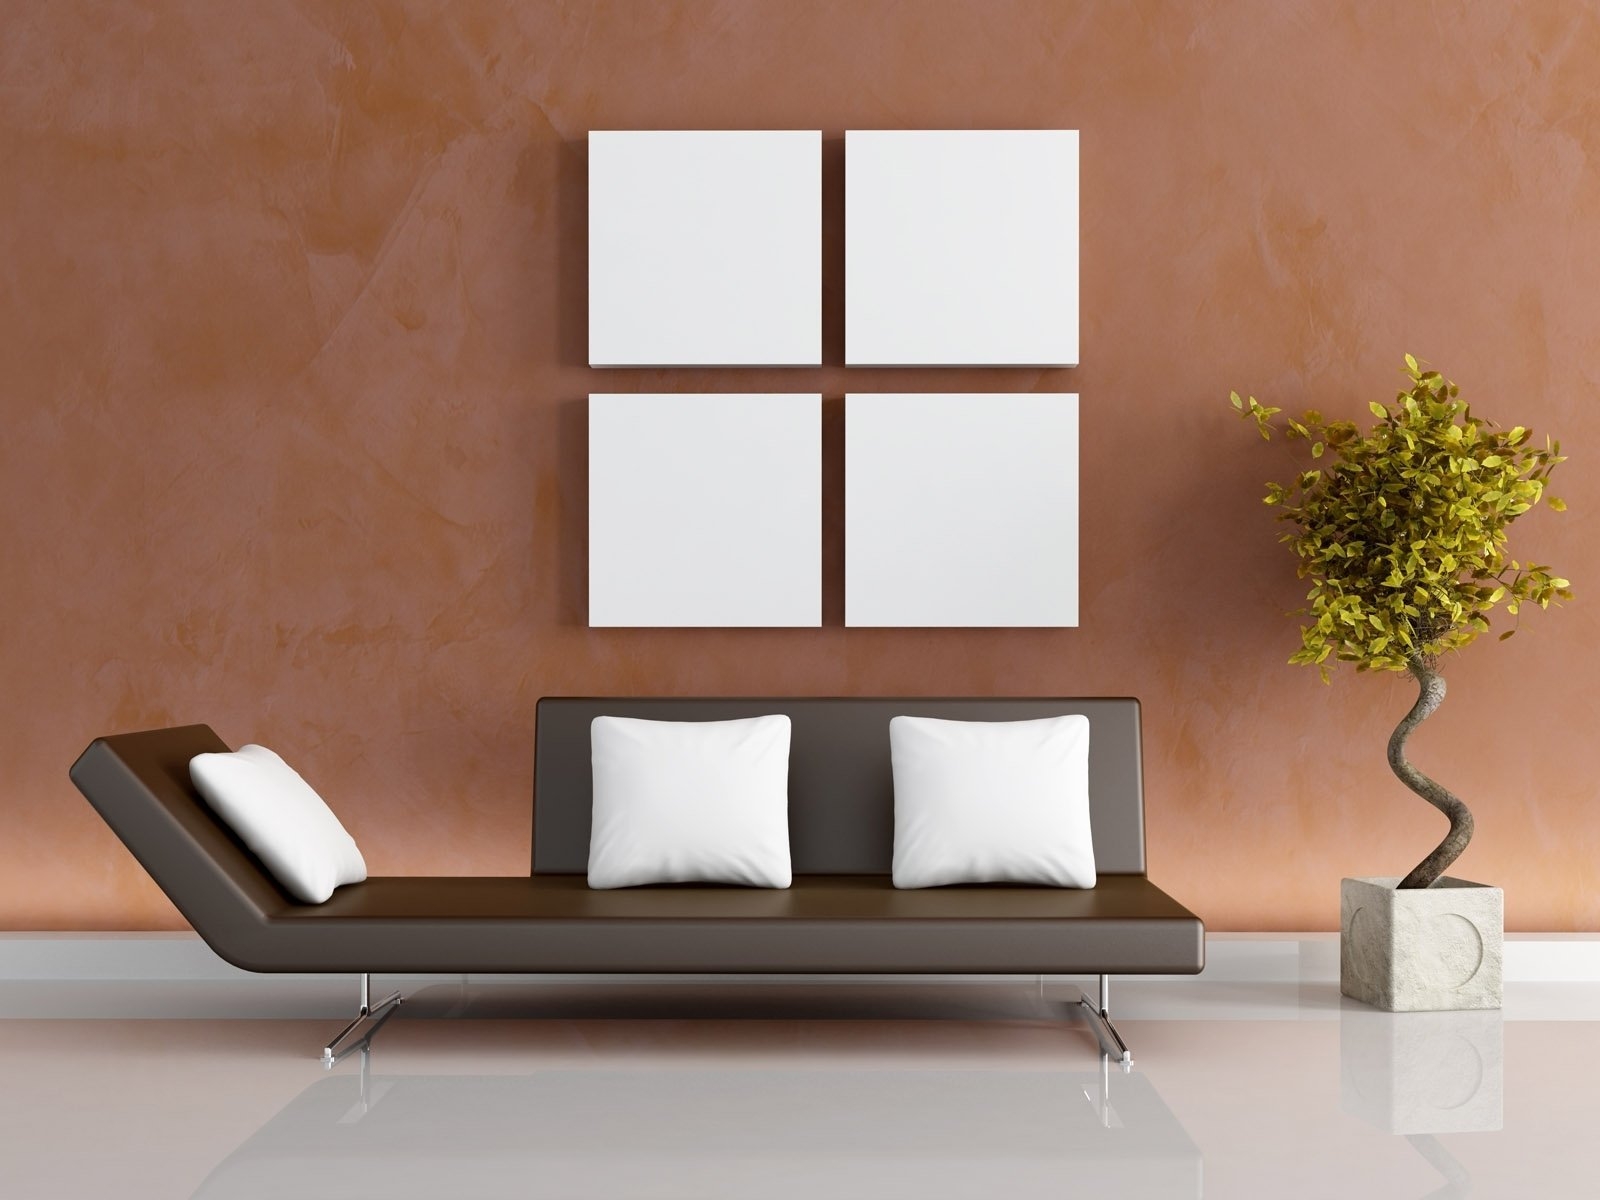 Modern living decor for 1600 x 1200 resolution